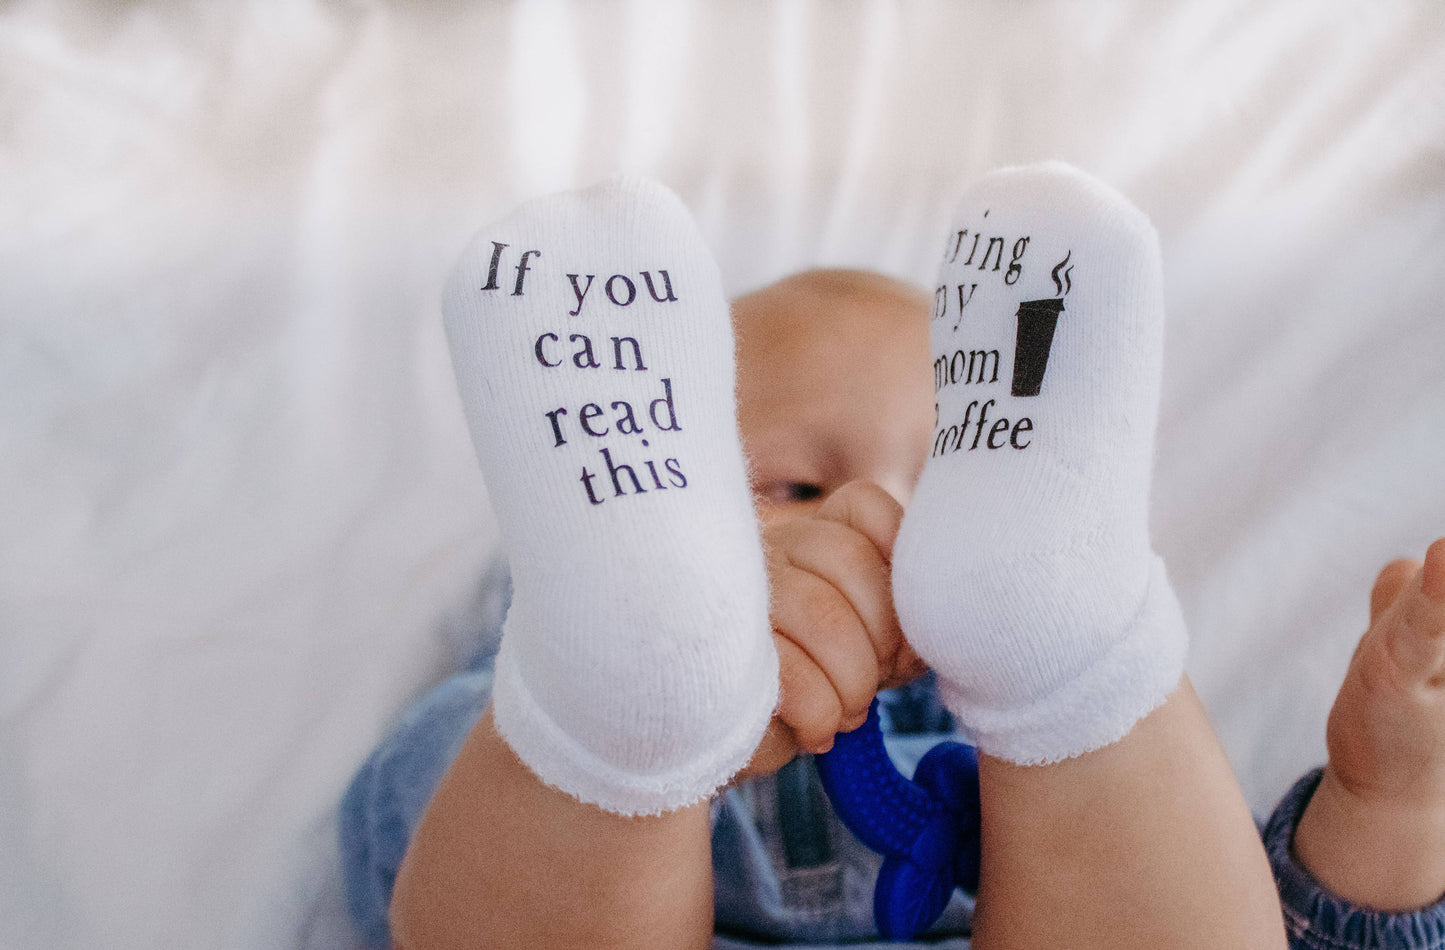 Bring My Mom Coffee Baby Socks